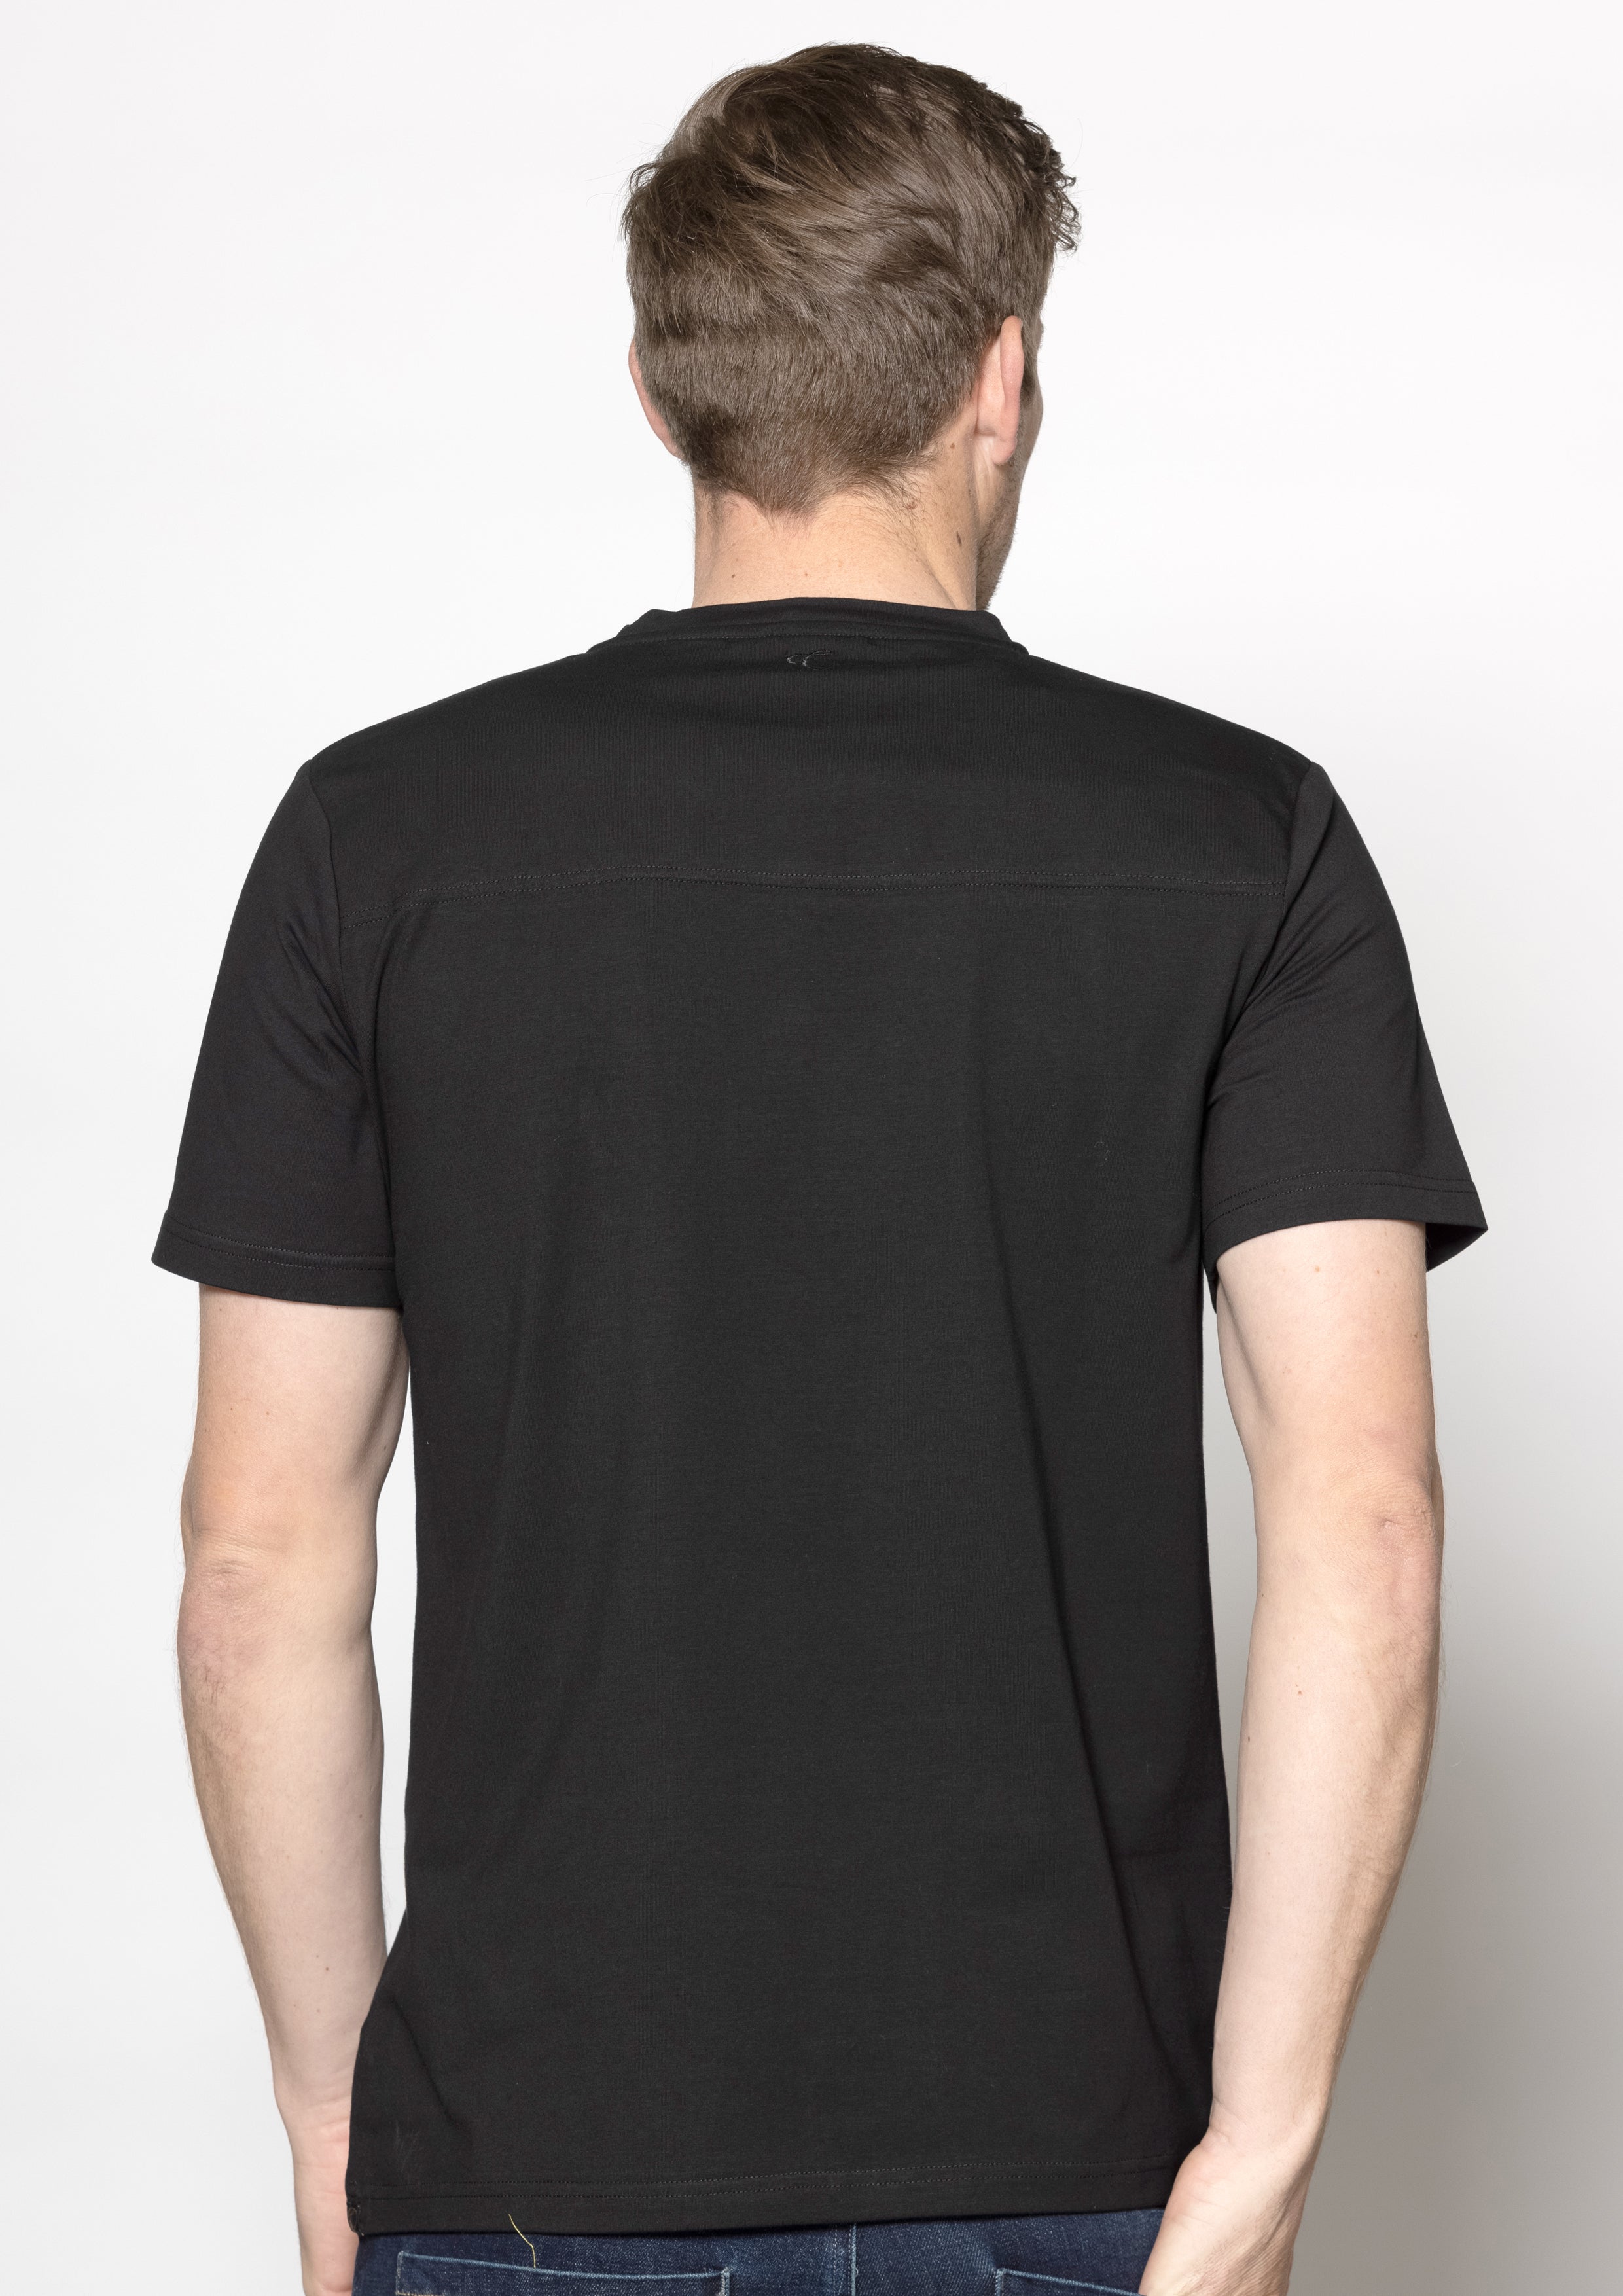 Cutler & Co Oakley T-Shirt - Black – Oxfords Clothing